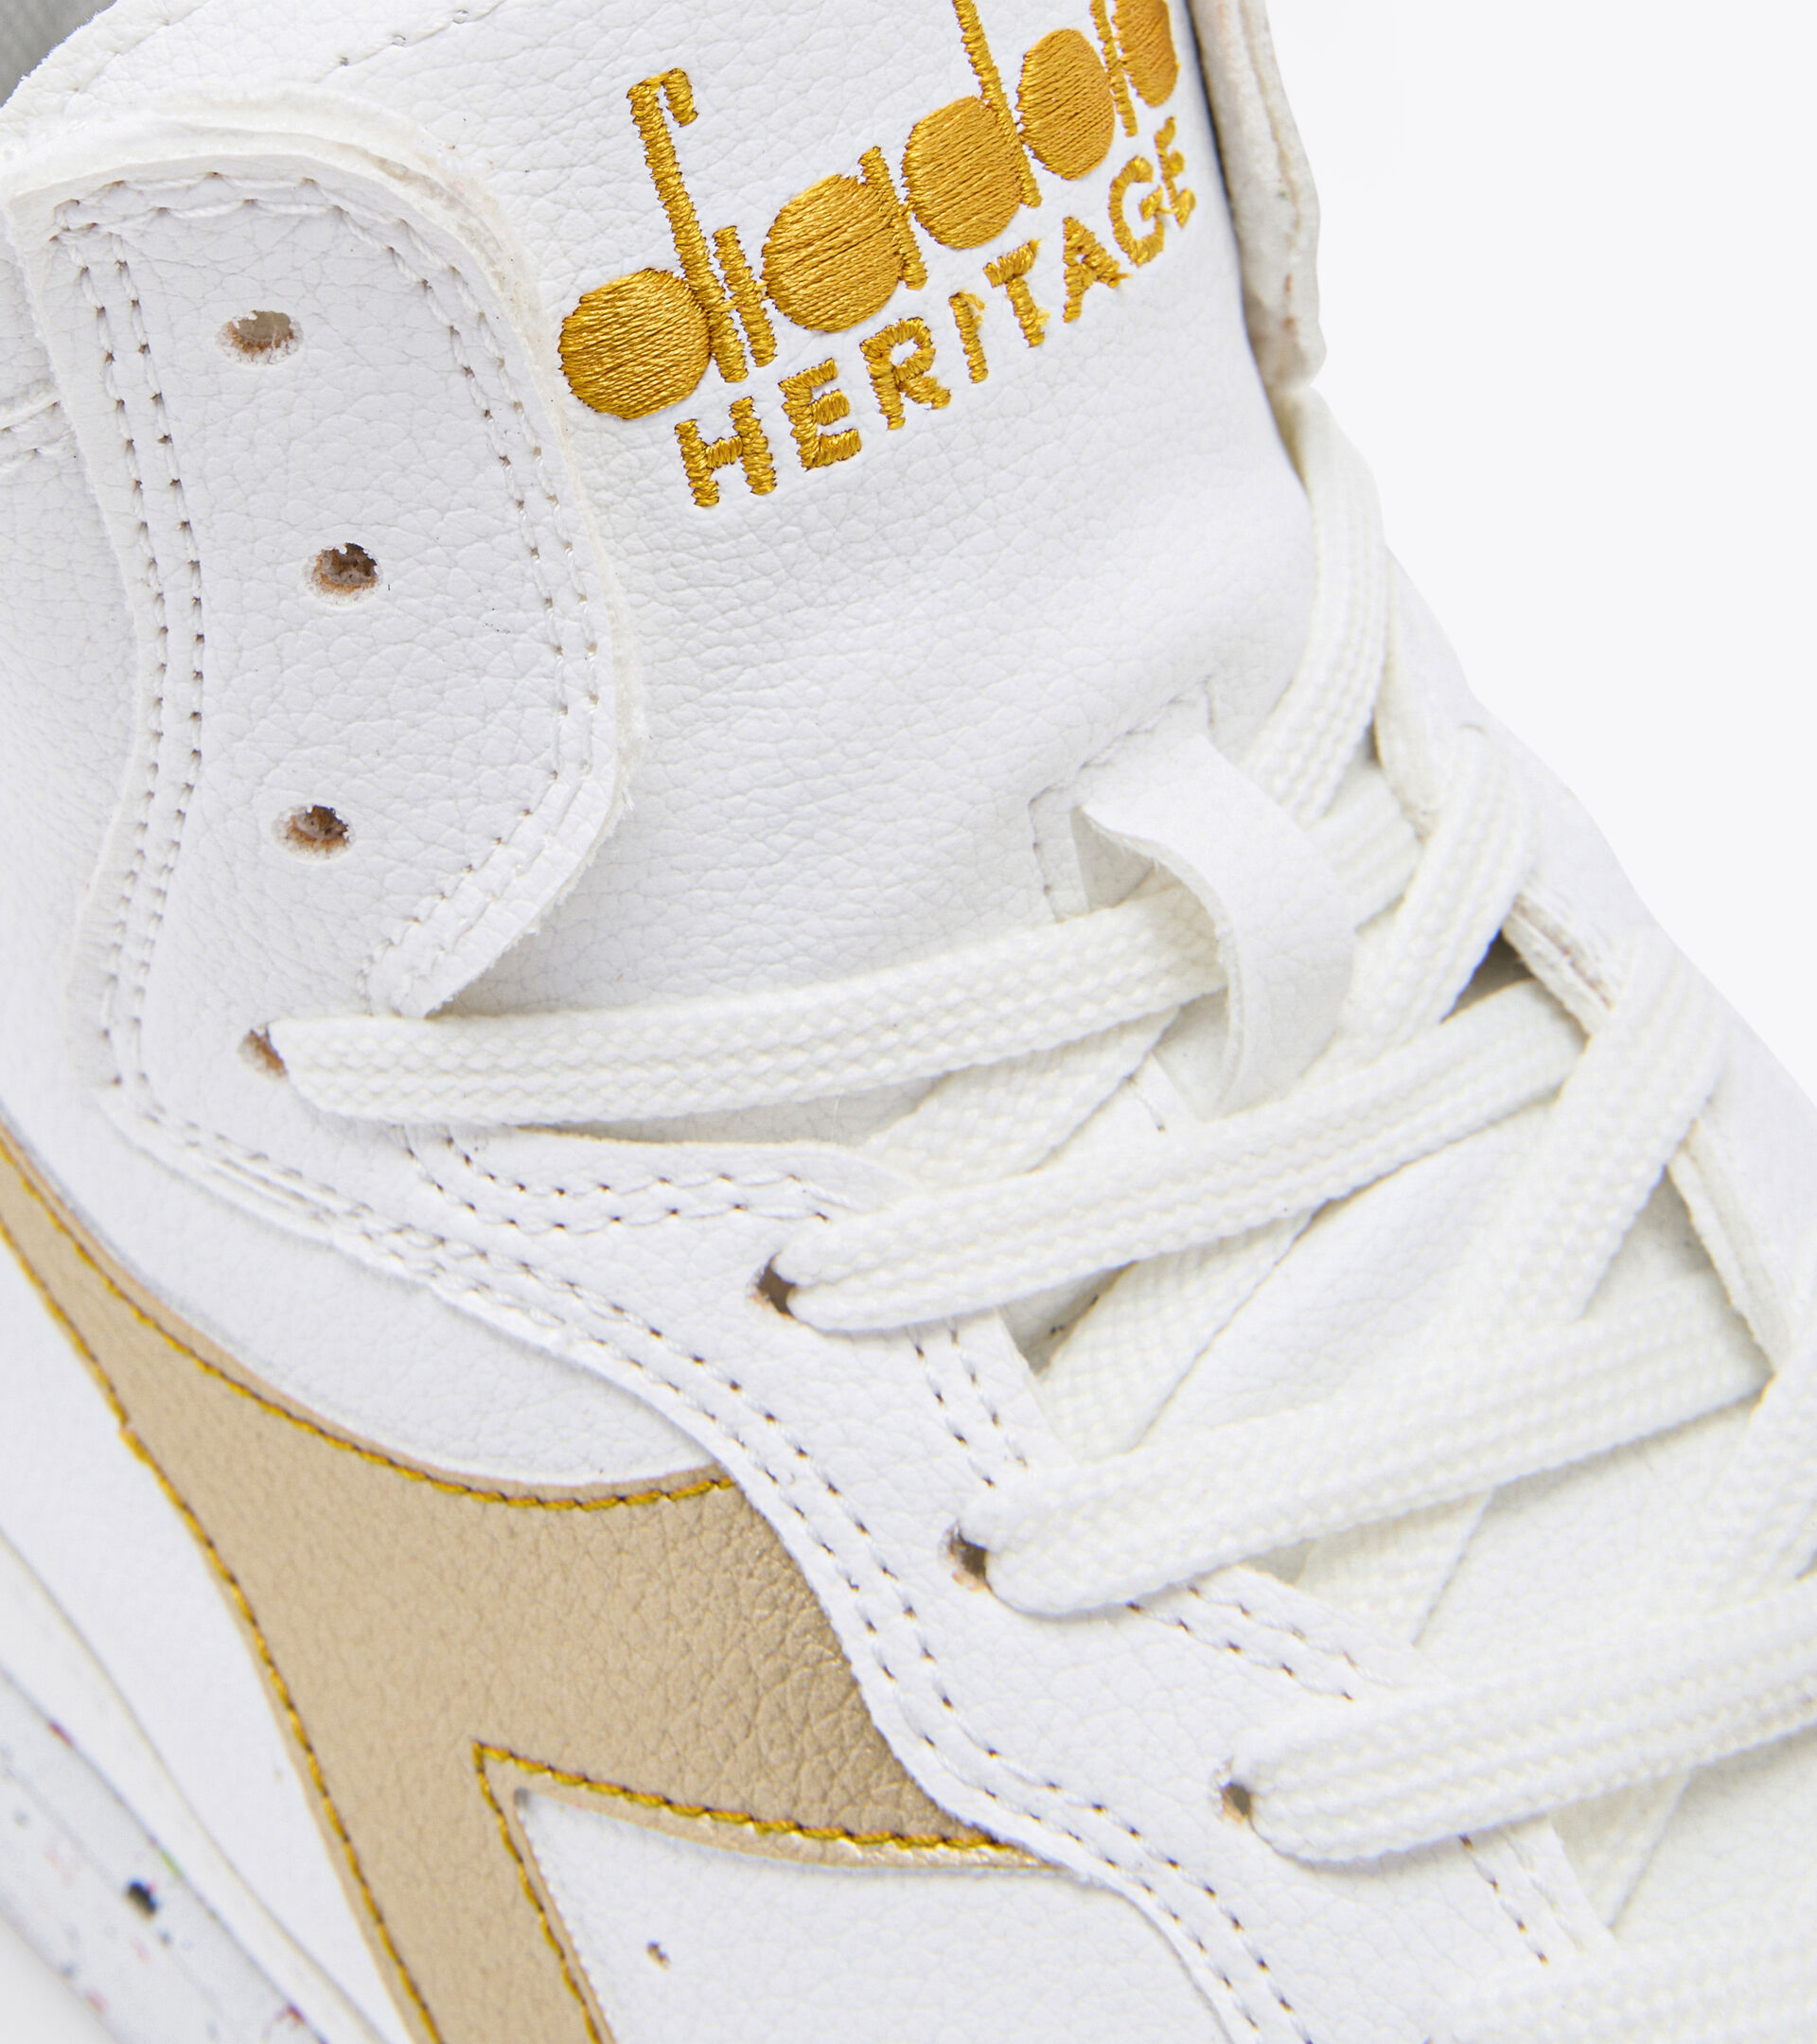 Heritage shoes - Unisex MI BASKET 2030 WHITE/RICH GOLD (C5363) - Diadora